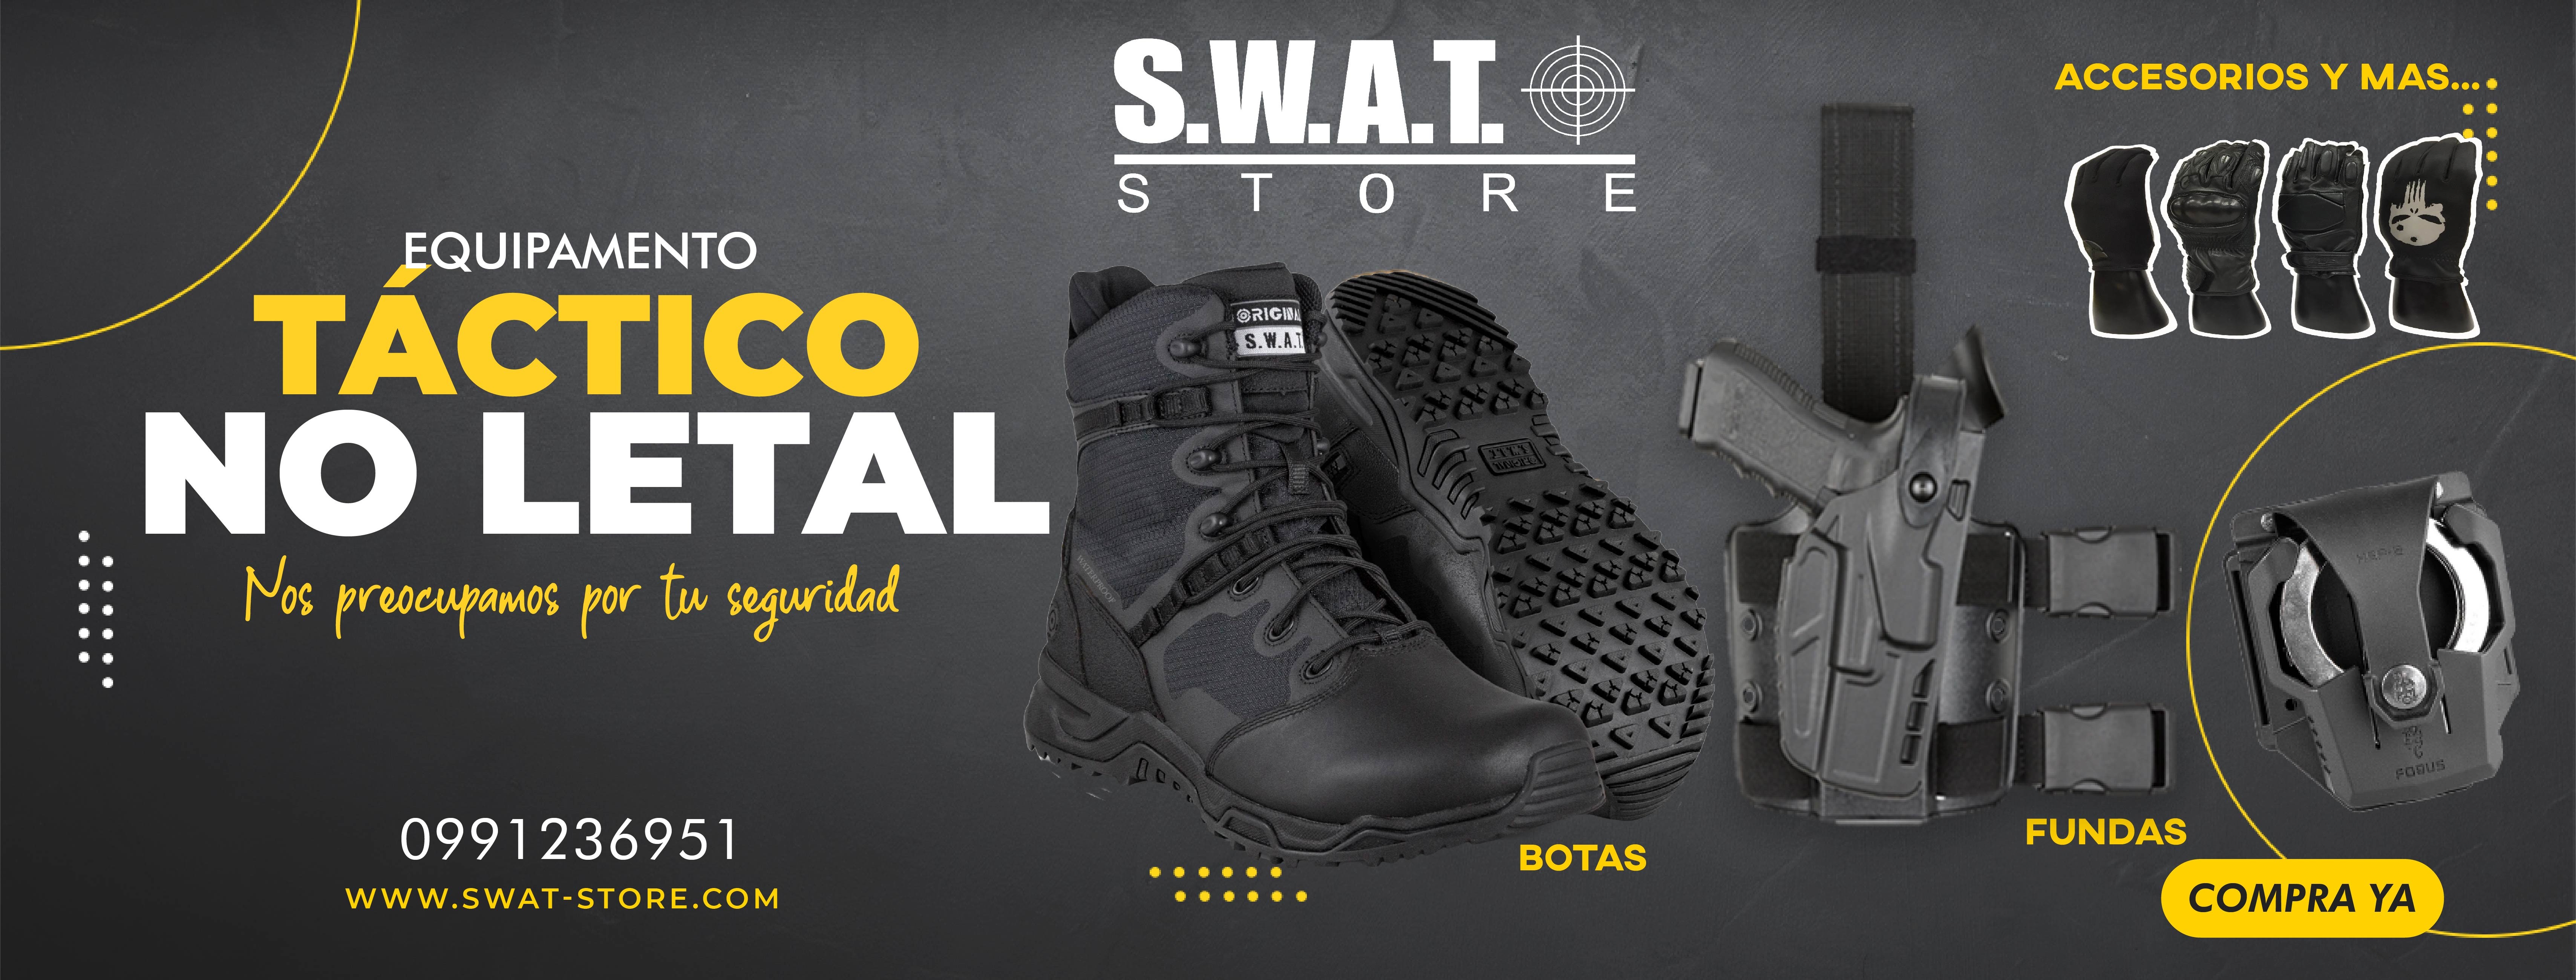 Swat Store Ecuador